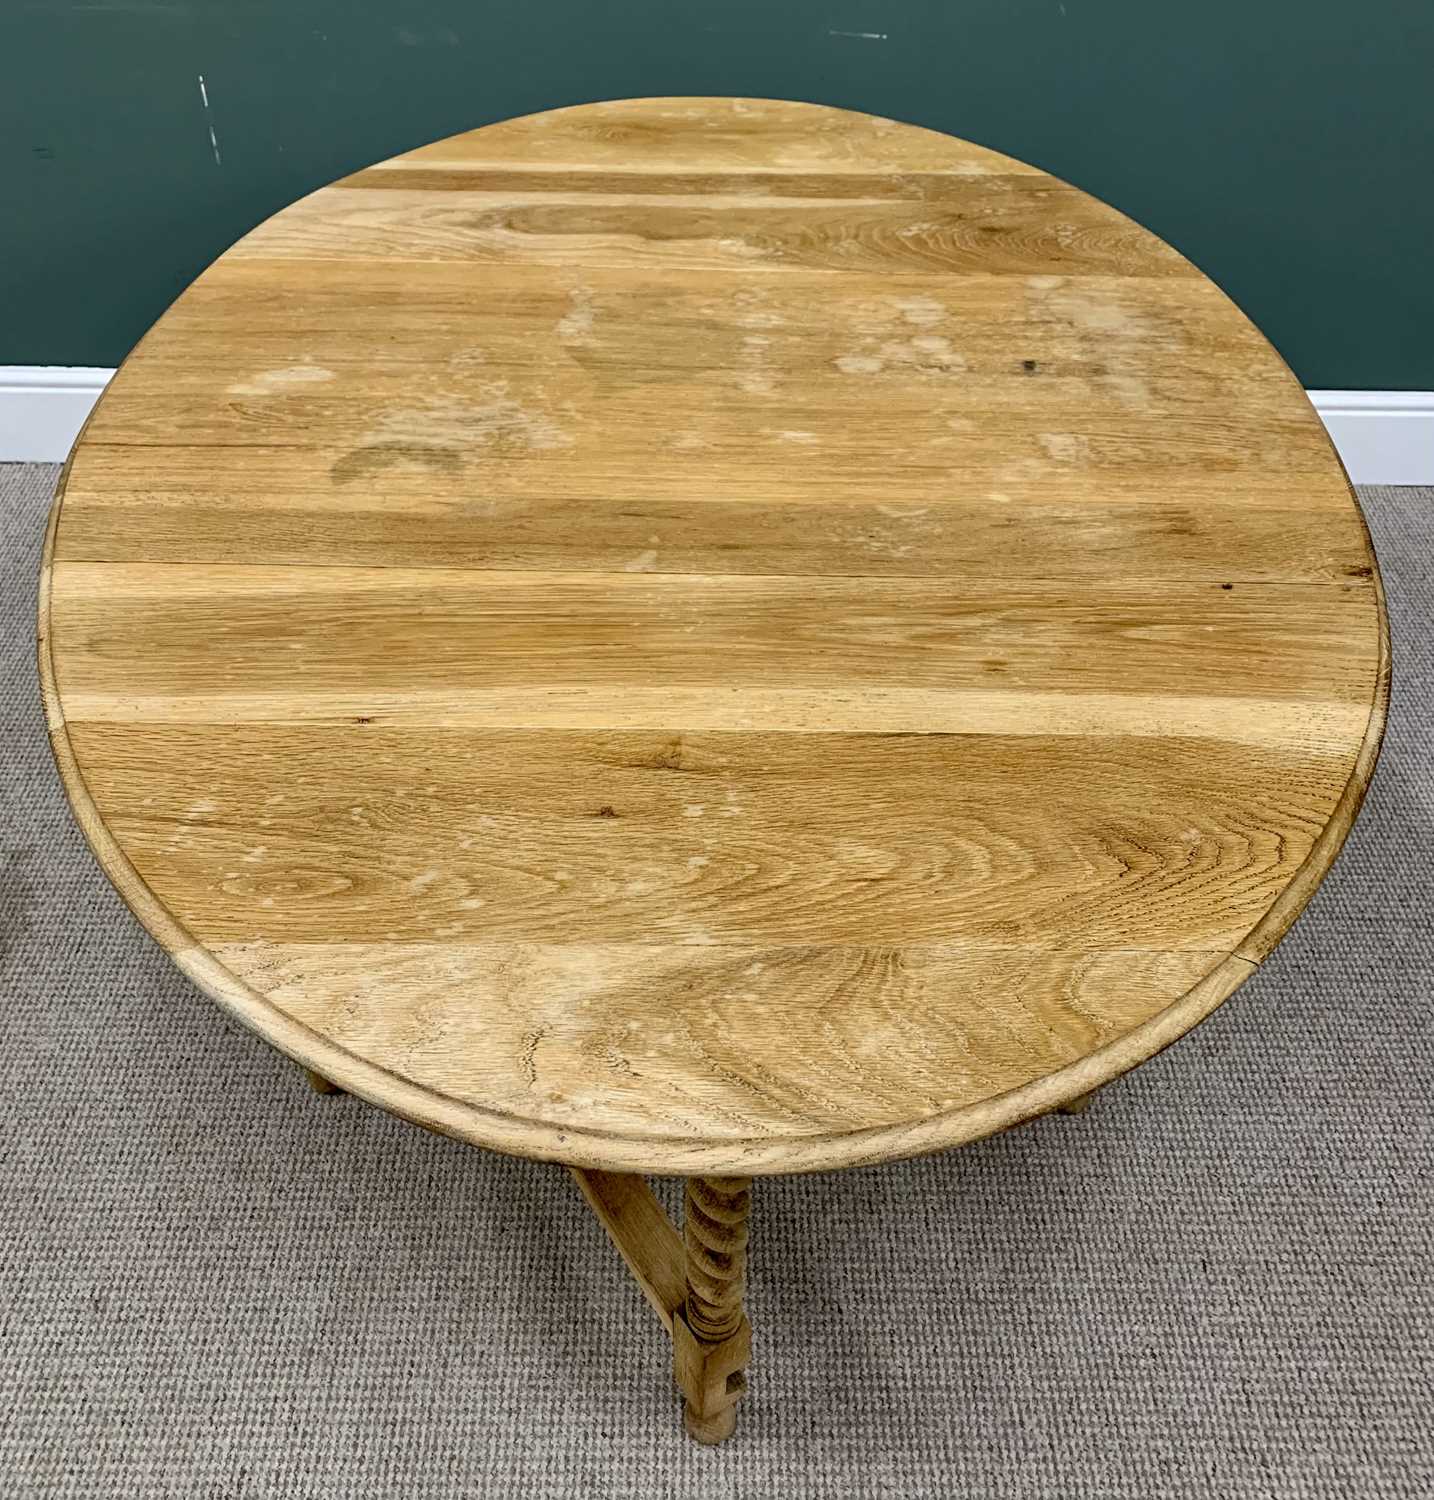 BARLEY TWIST GATE LEG TABLE - bleached oak, 74cms H, 149cms W, 107cms D (open) - Image 4 of 4